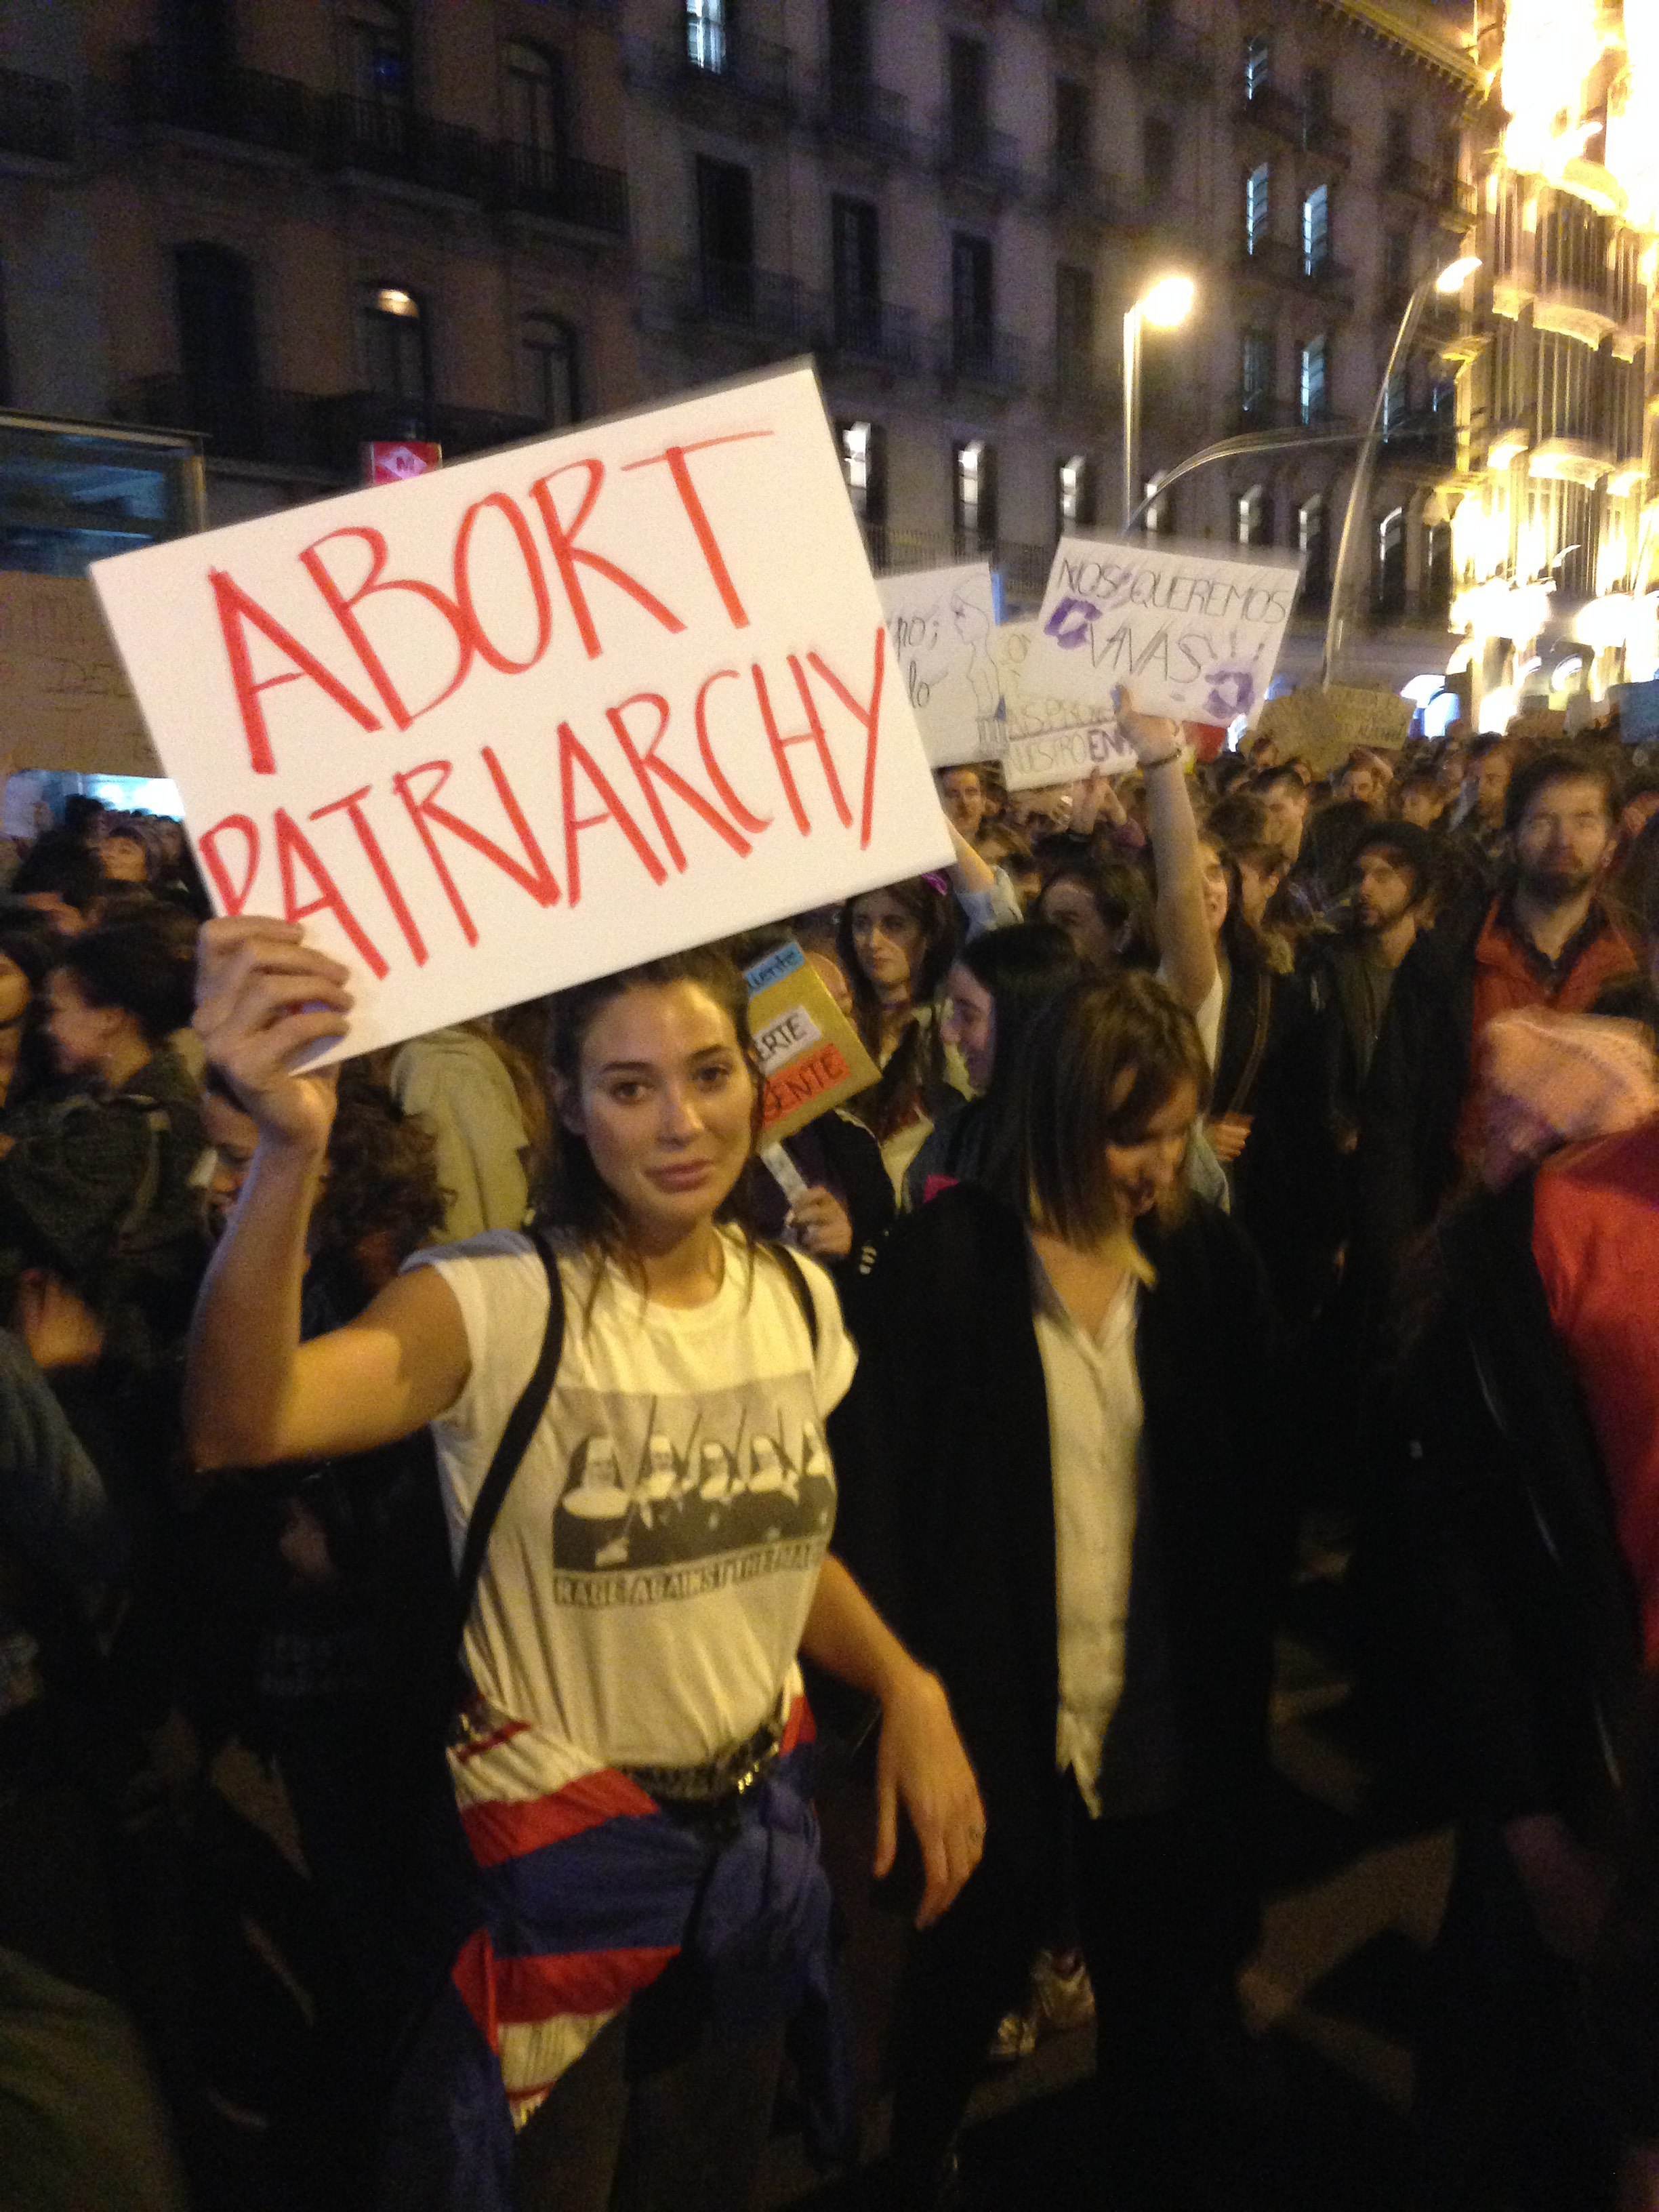 12 Abort Patriarchy